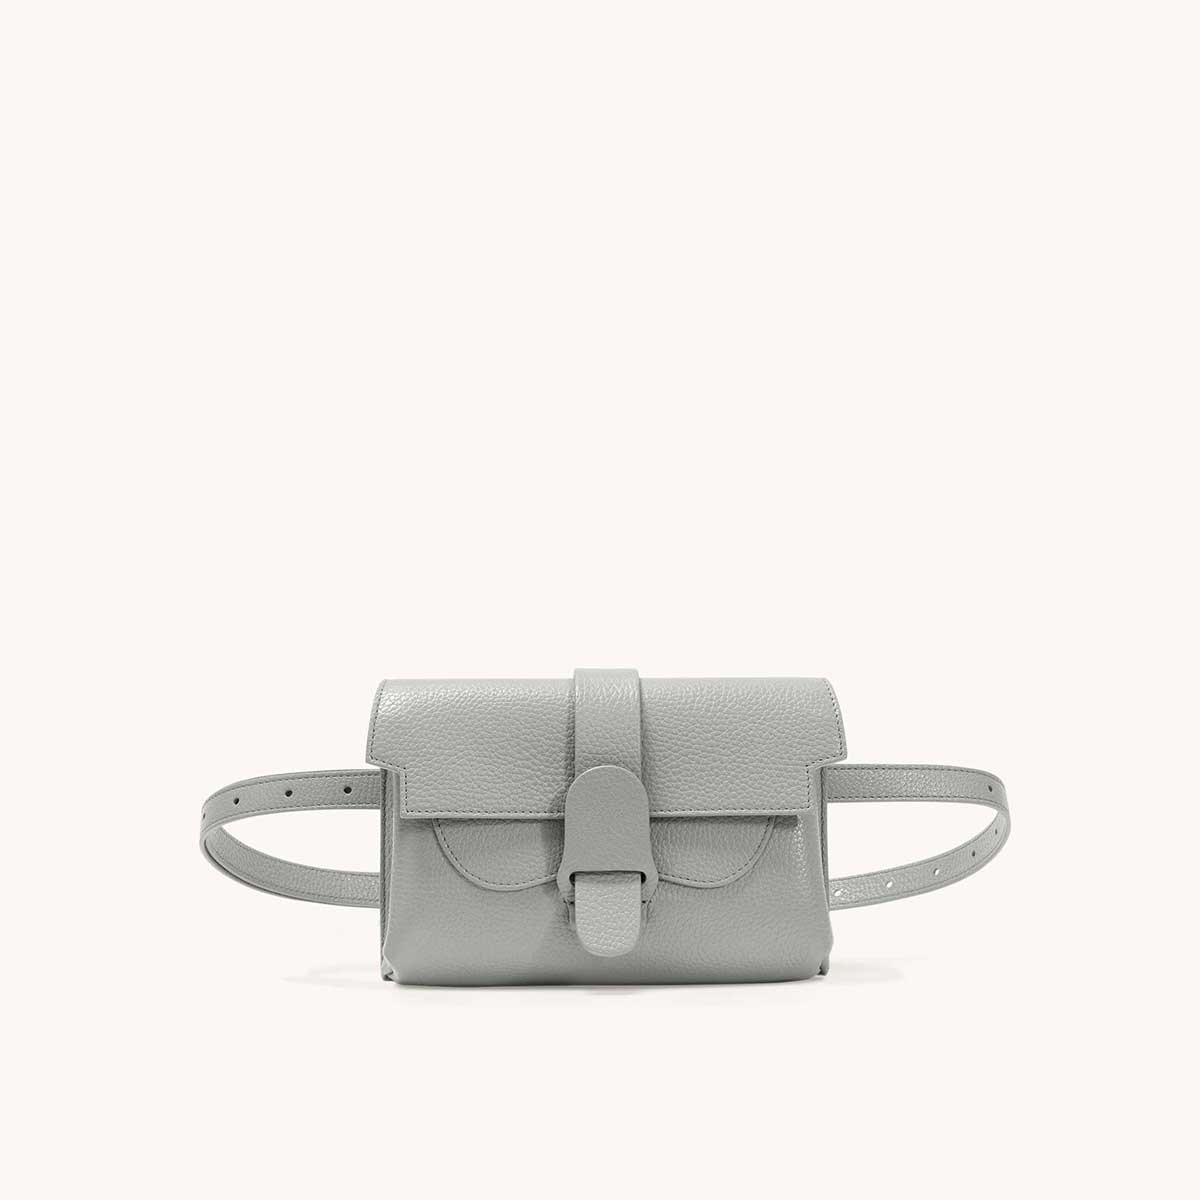 15 Cute Designer Fanny Packs - Stylish Belt Bags Making a Comeback